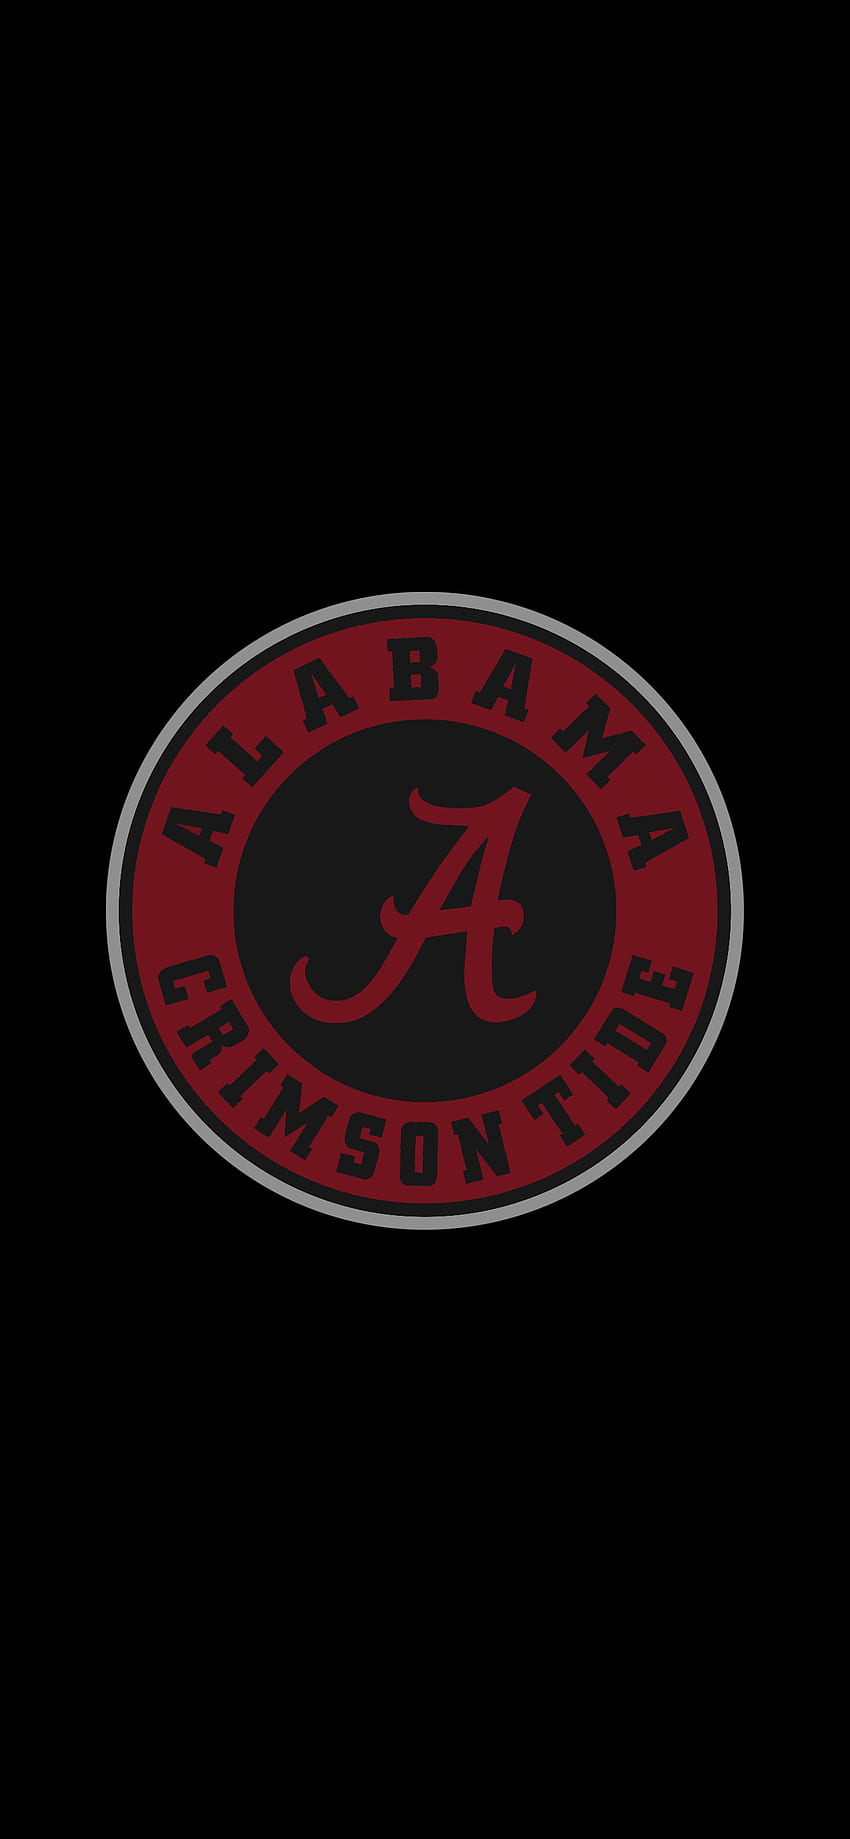 bama negro. Logotipo de marea carmesí de Alabama, fútbol de marea carmesí de Alabama, marea carmesí de Alabama fondo de pantalla del teléfono